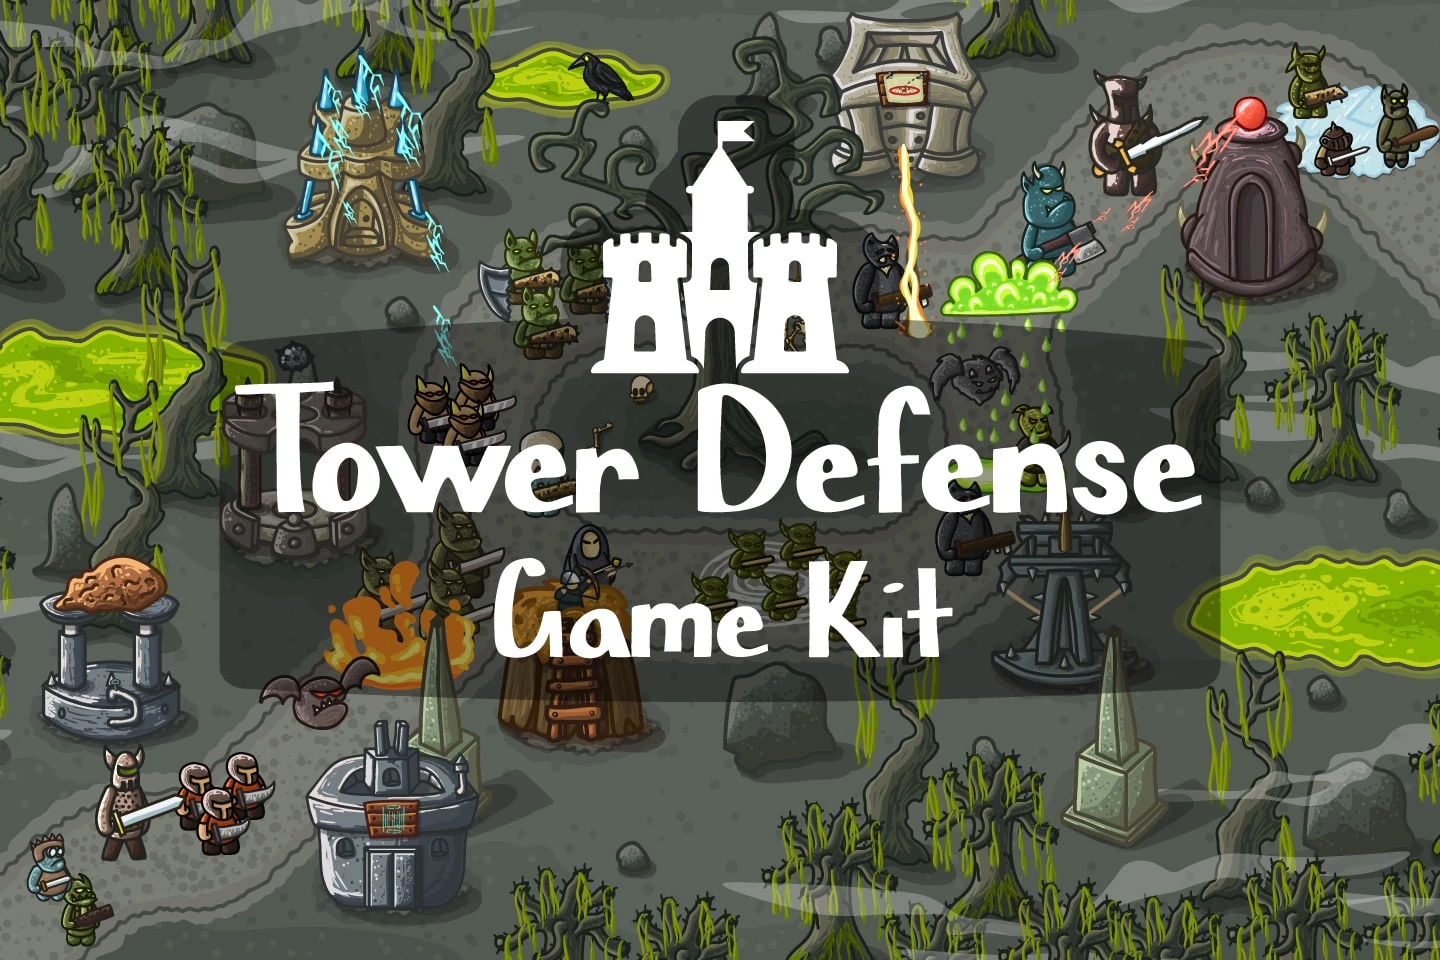 Free Fields Tileset Pixel Art for Tower Defense 